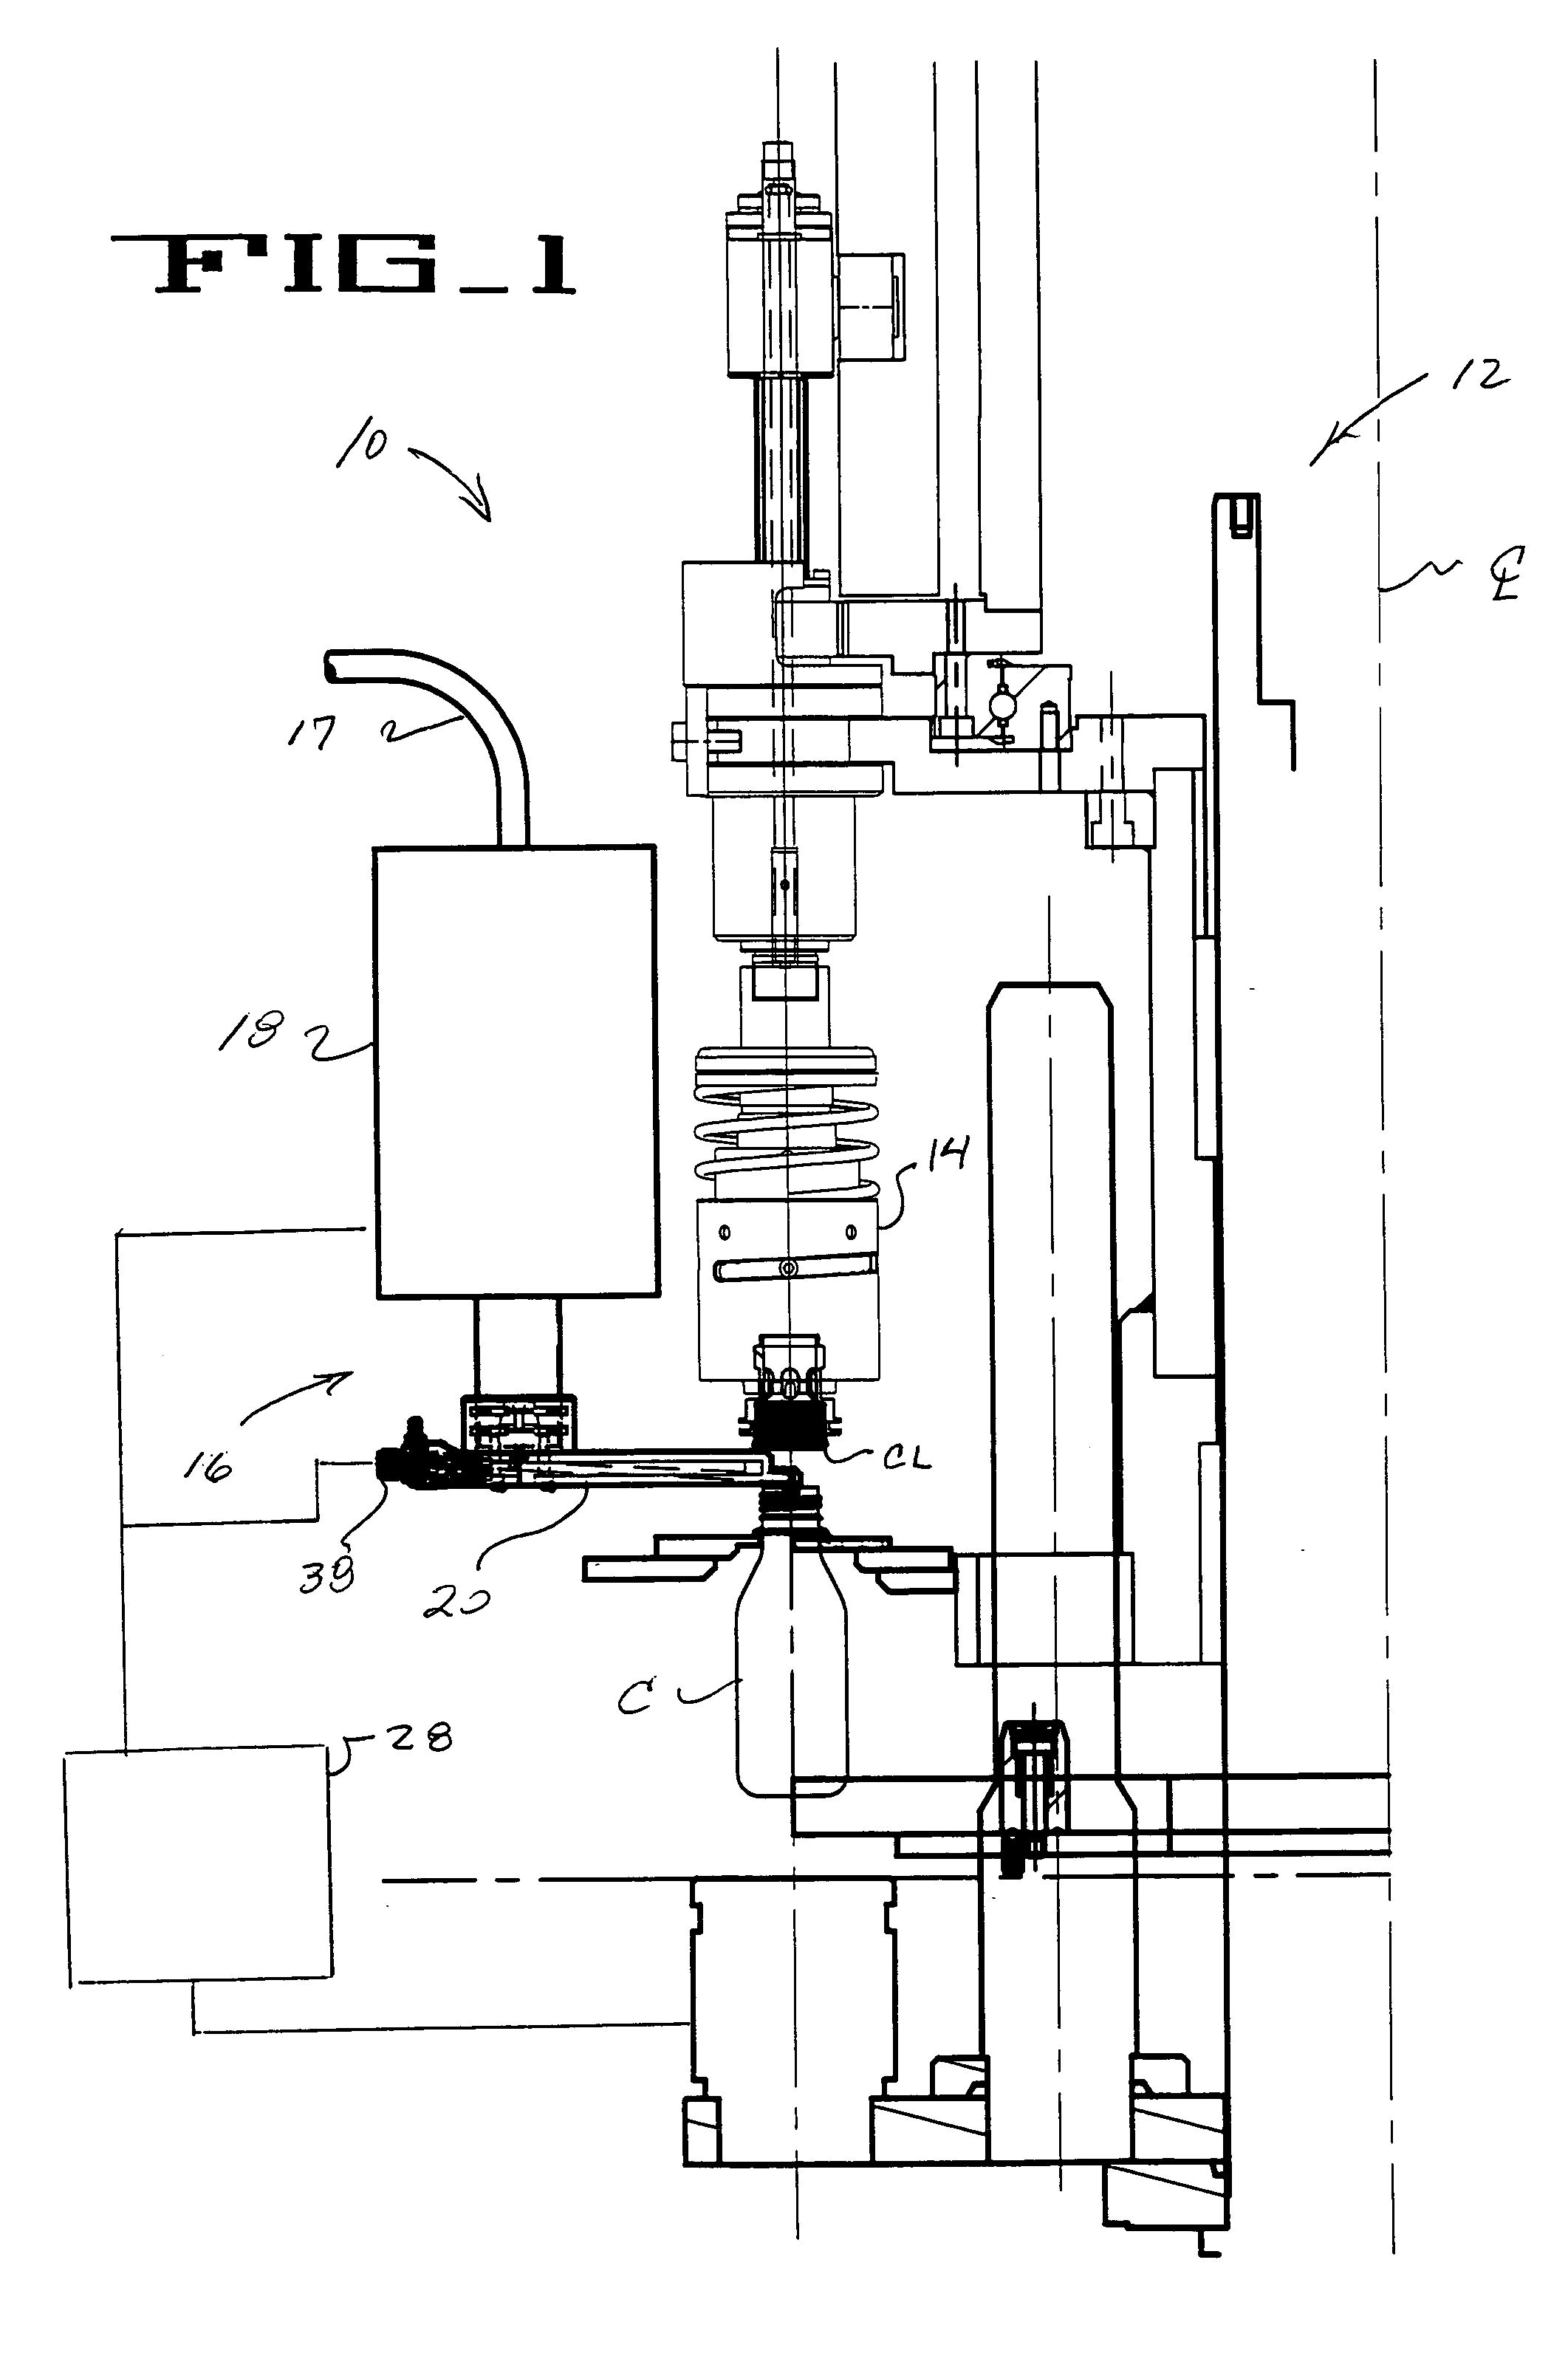 Capping and nitrogen dosing apparatus